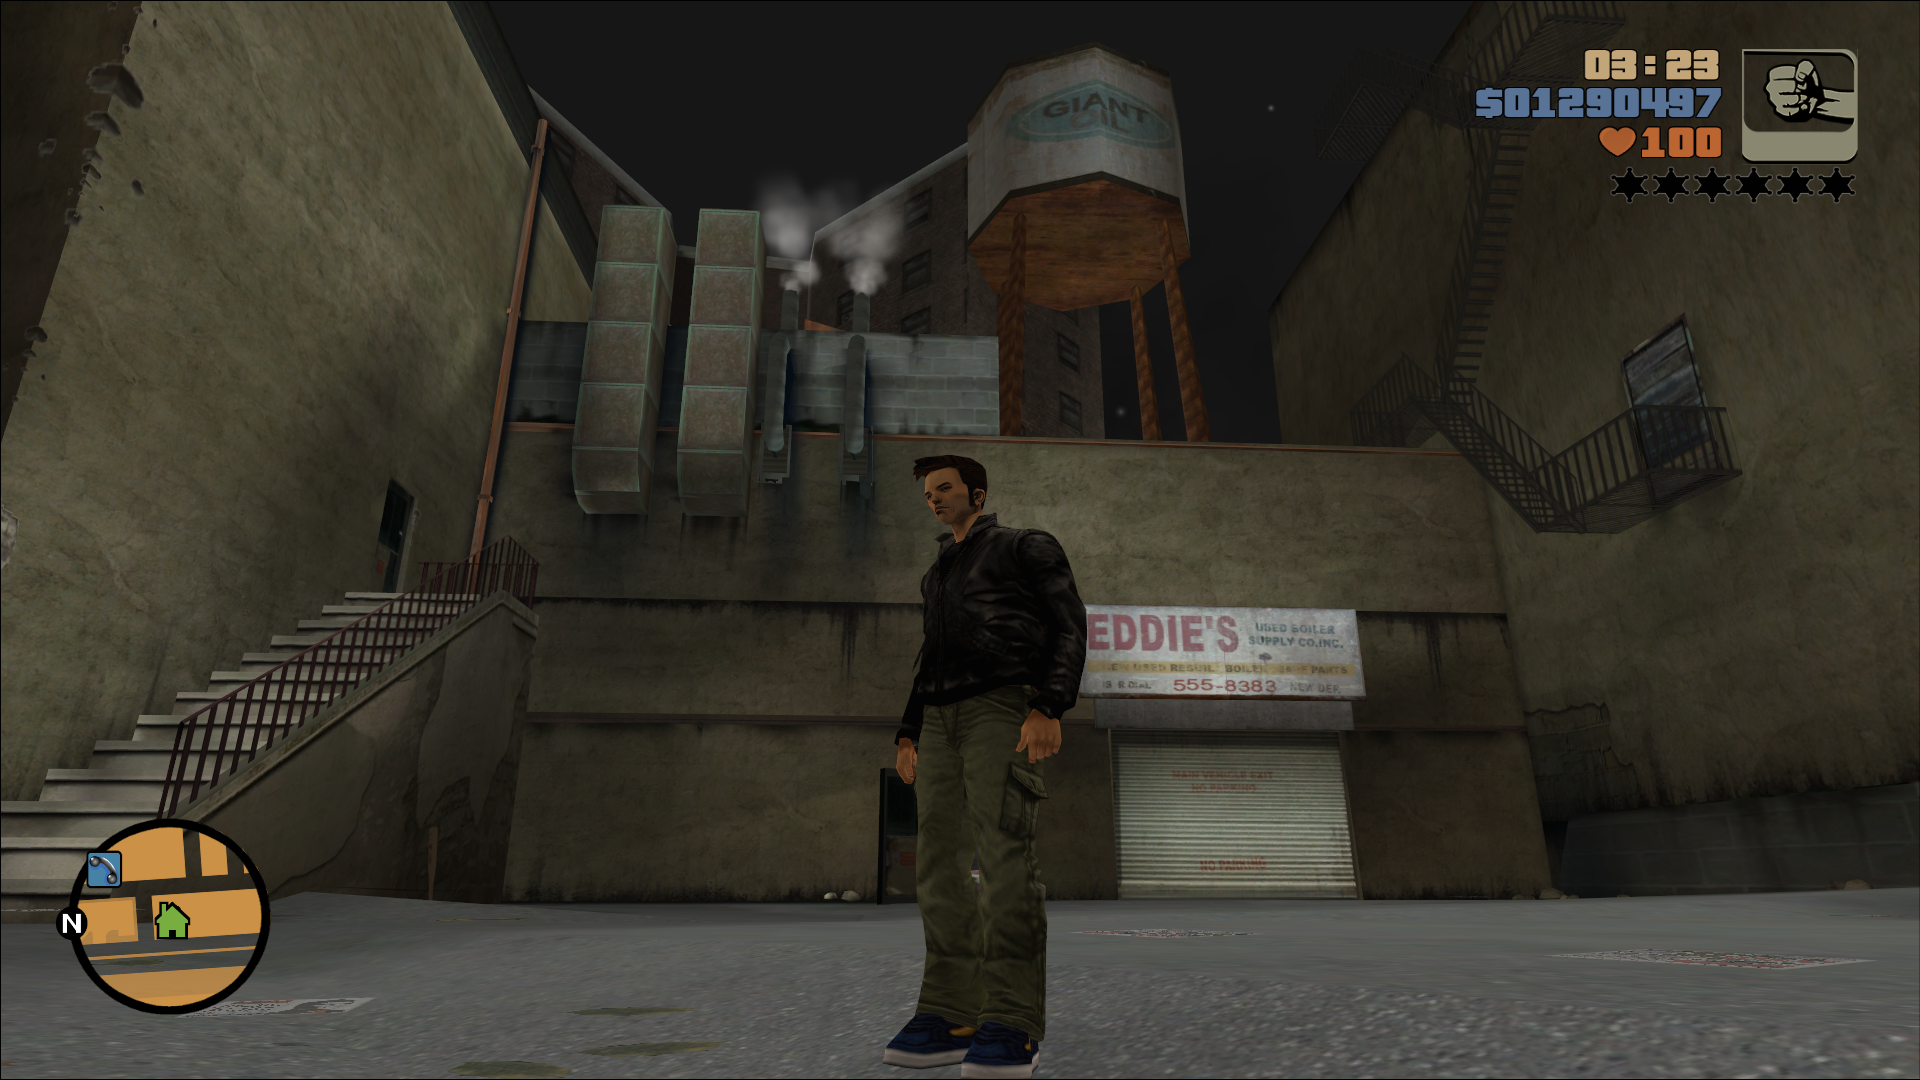 Grand Theft Auto III Definitive Edition file - Mod DB